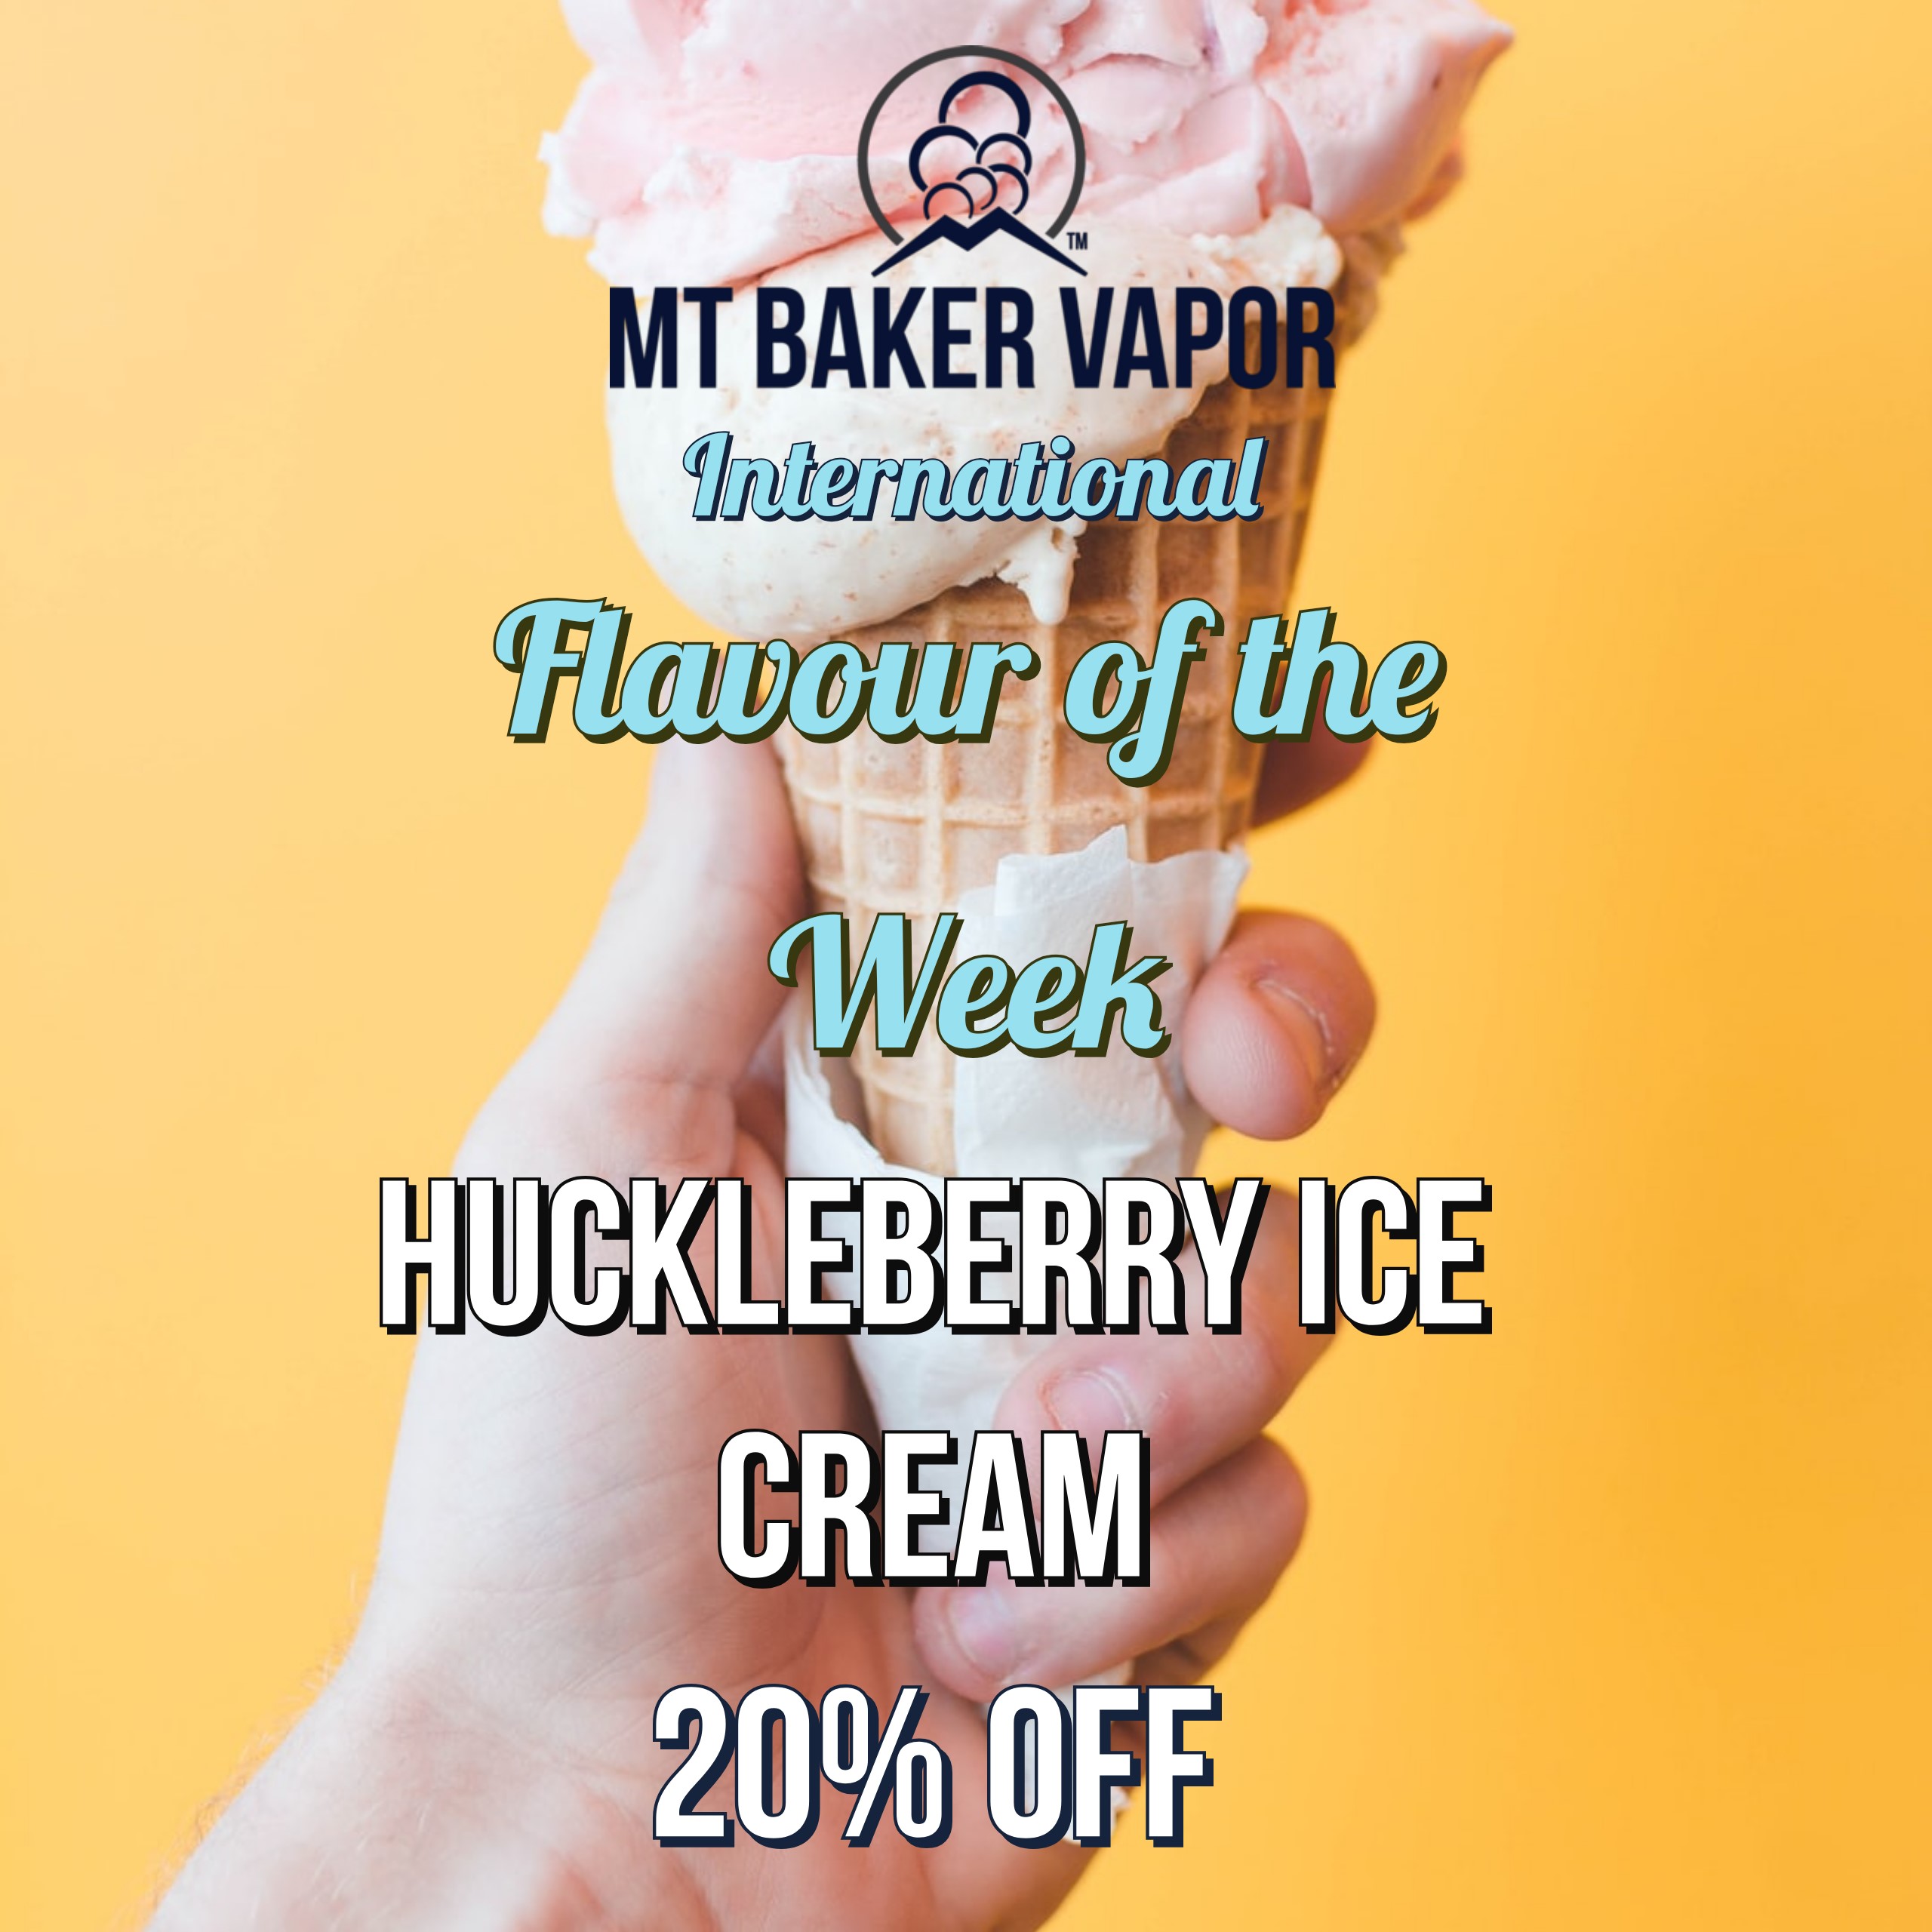 Mt Baker Vapor Huckleberry Ice Cream